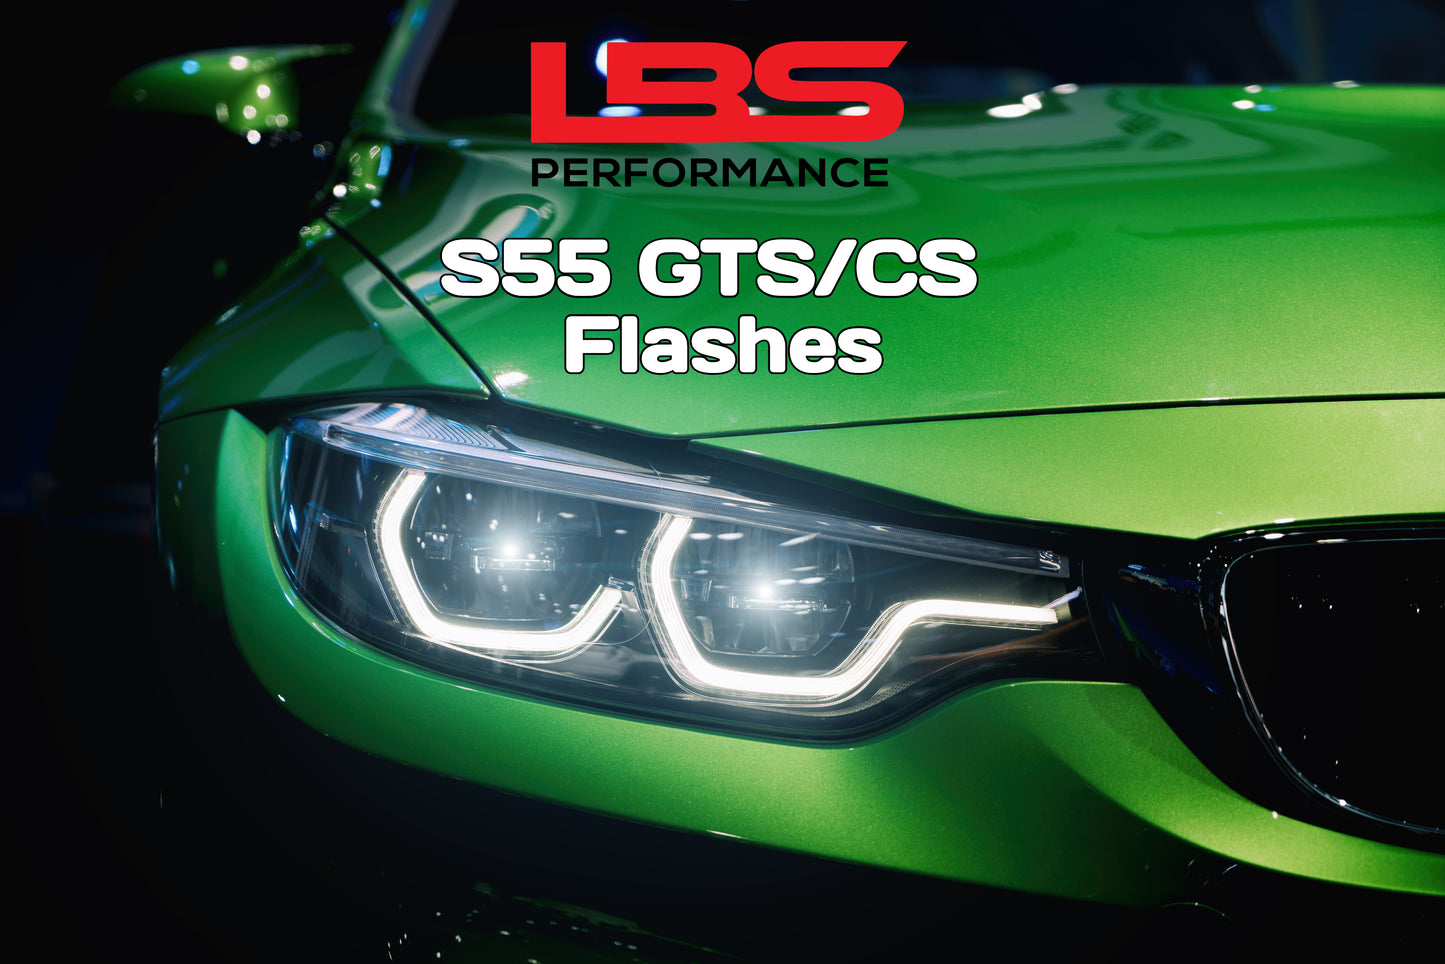 S55 GTS/CS Flashes